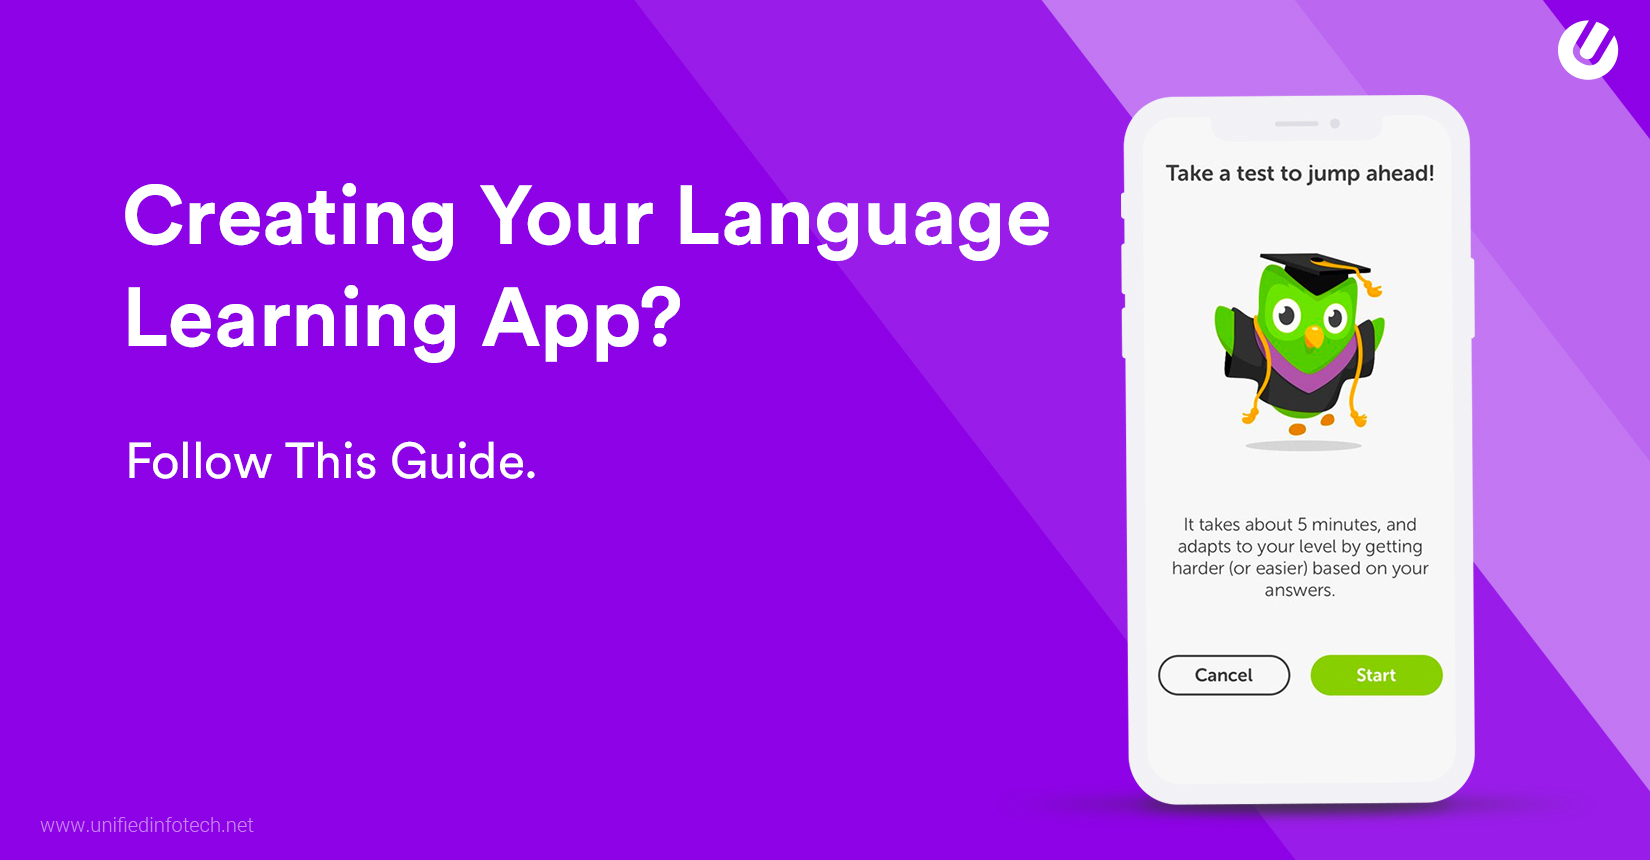 download easy lingo portable language